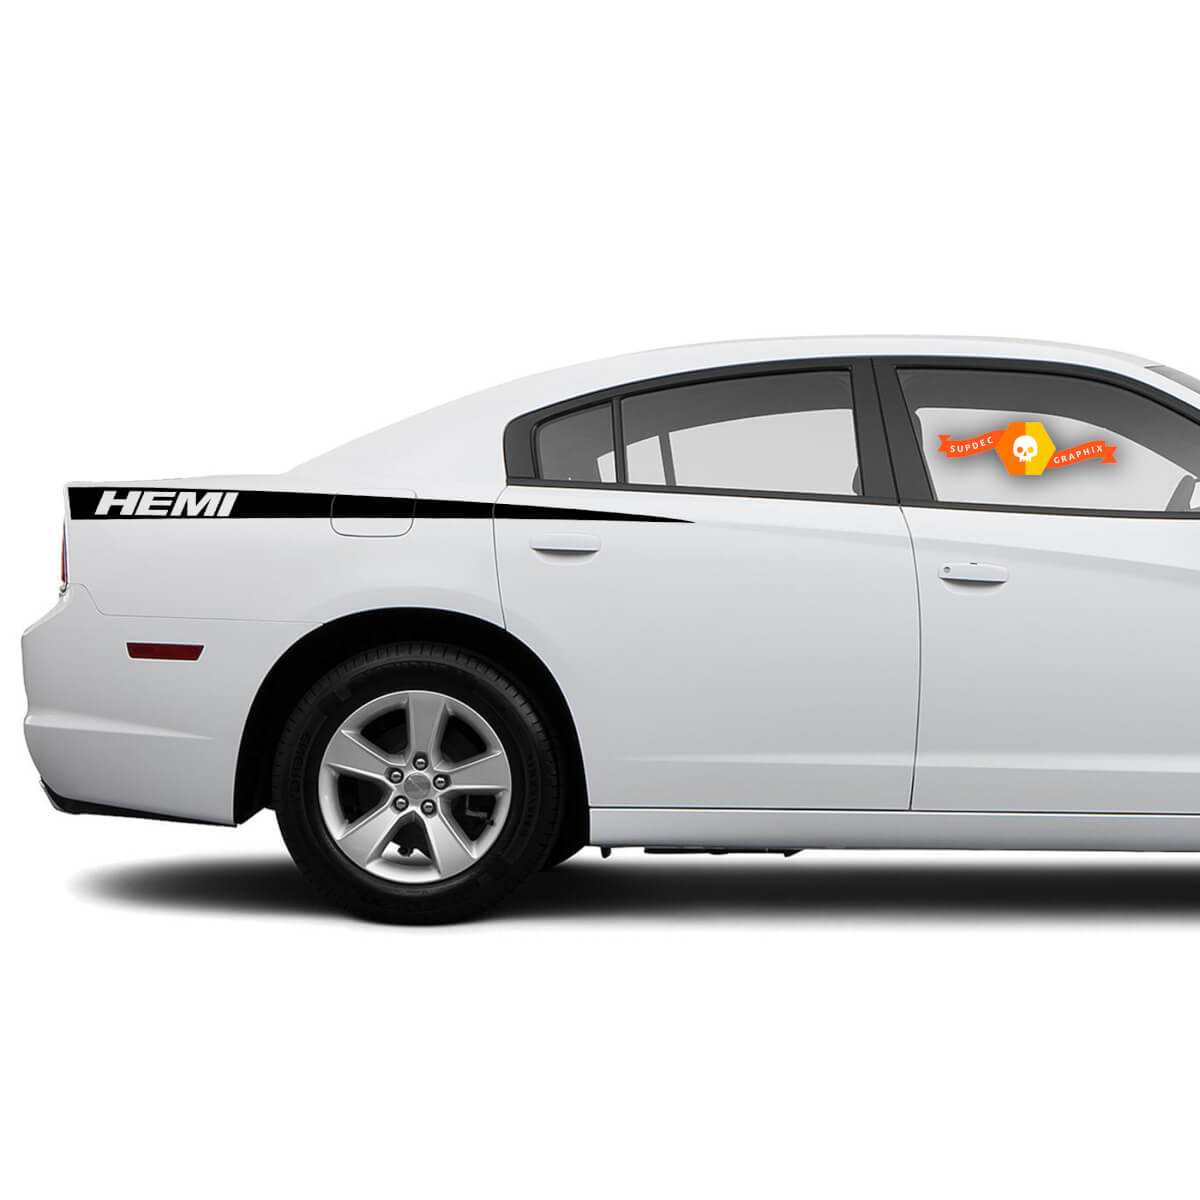 Dodge Charger Hemi Aufkleber Aufkleber Seitengrafiken passen zu Modellen 2011-2014